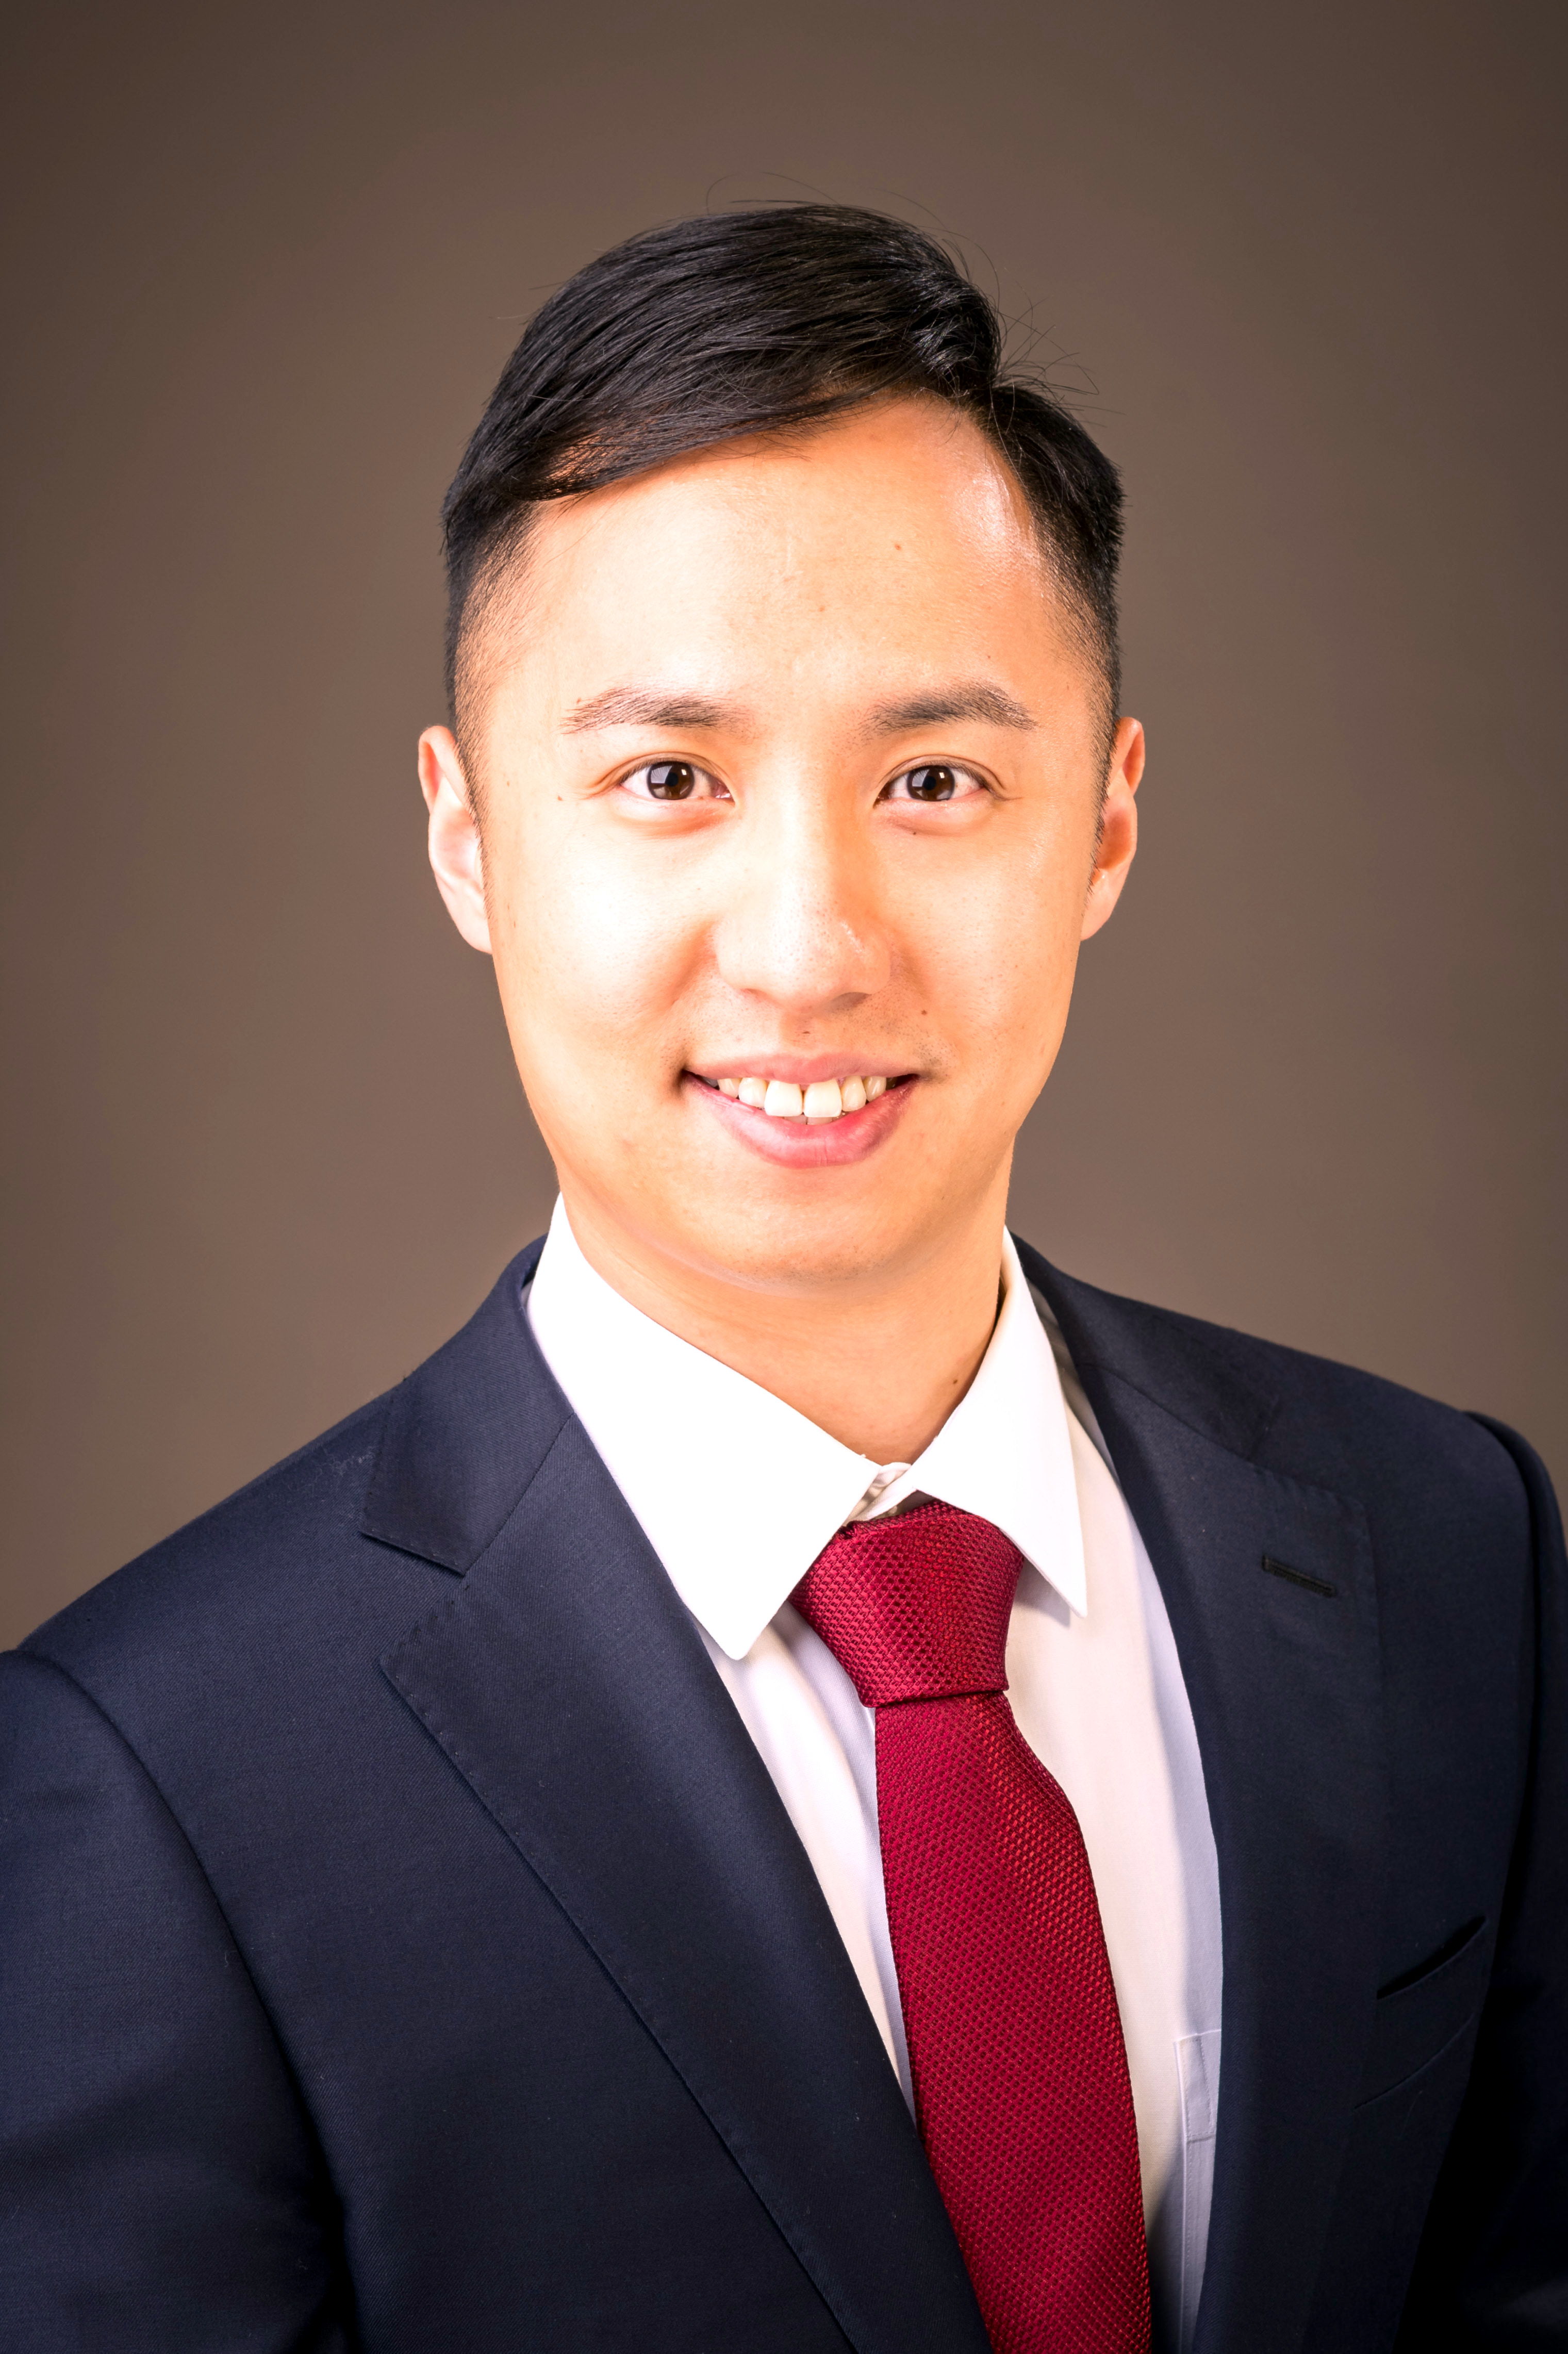 Joseph Liao MD Case Study and Scholarship Winner